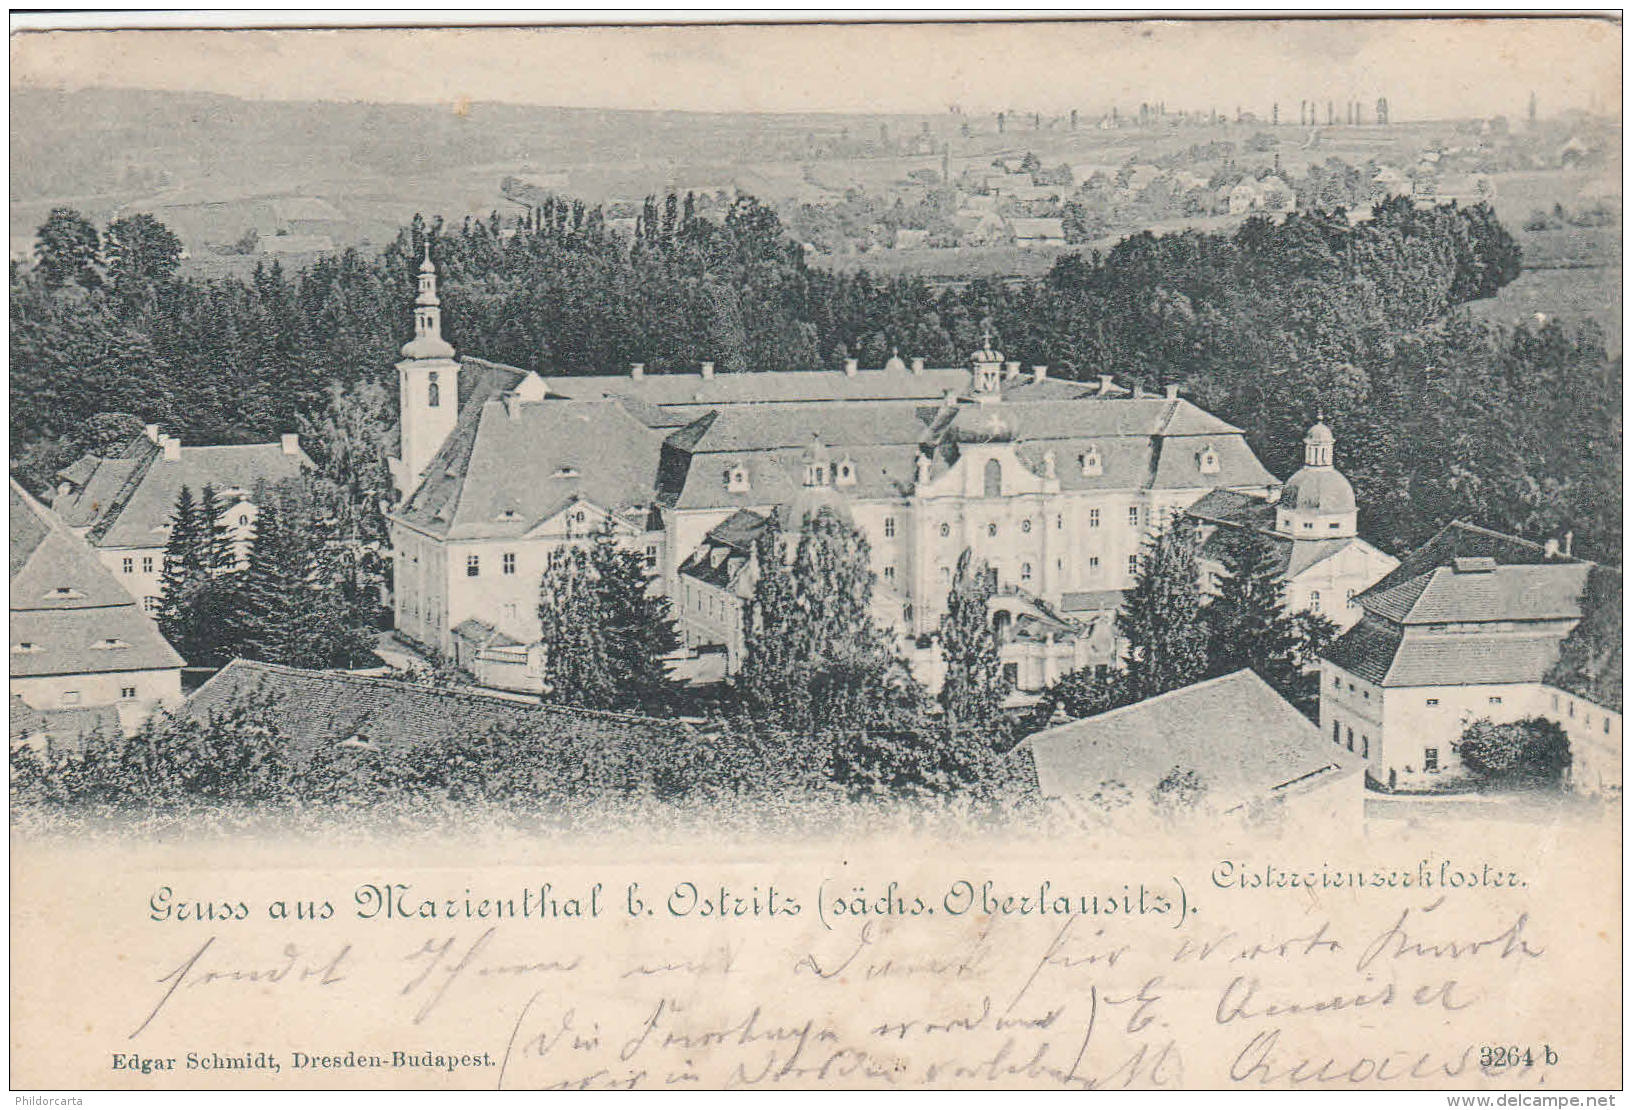 Marienthal B. Ostritz - Ostritz (Oberlausitz)